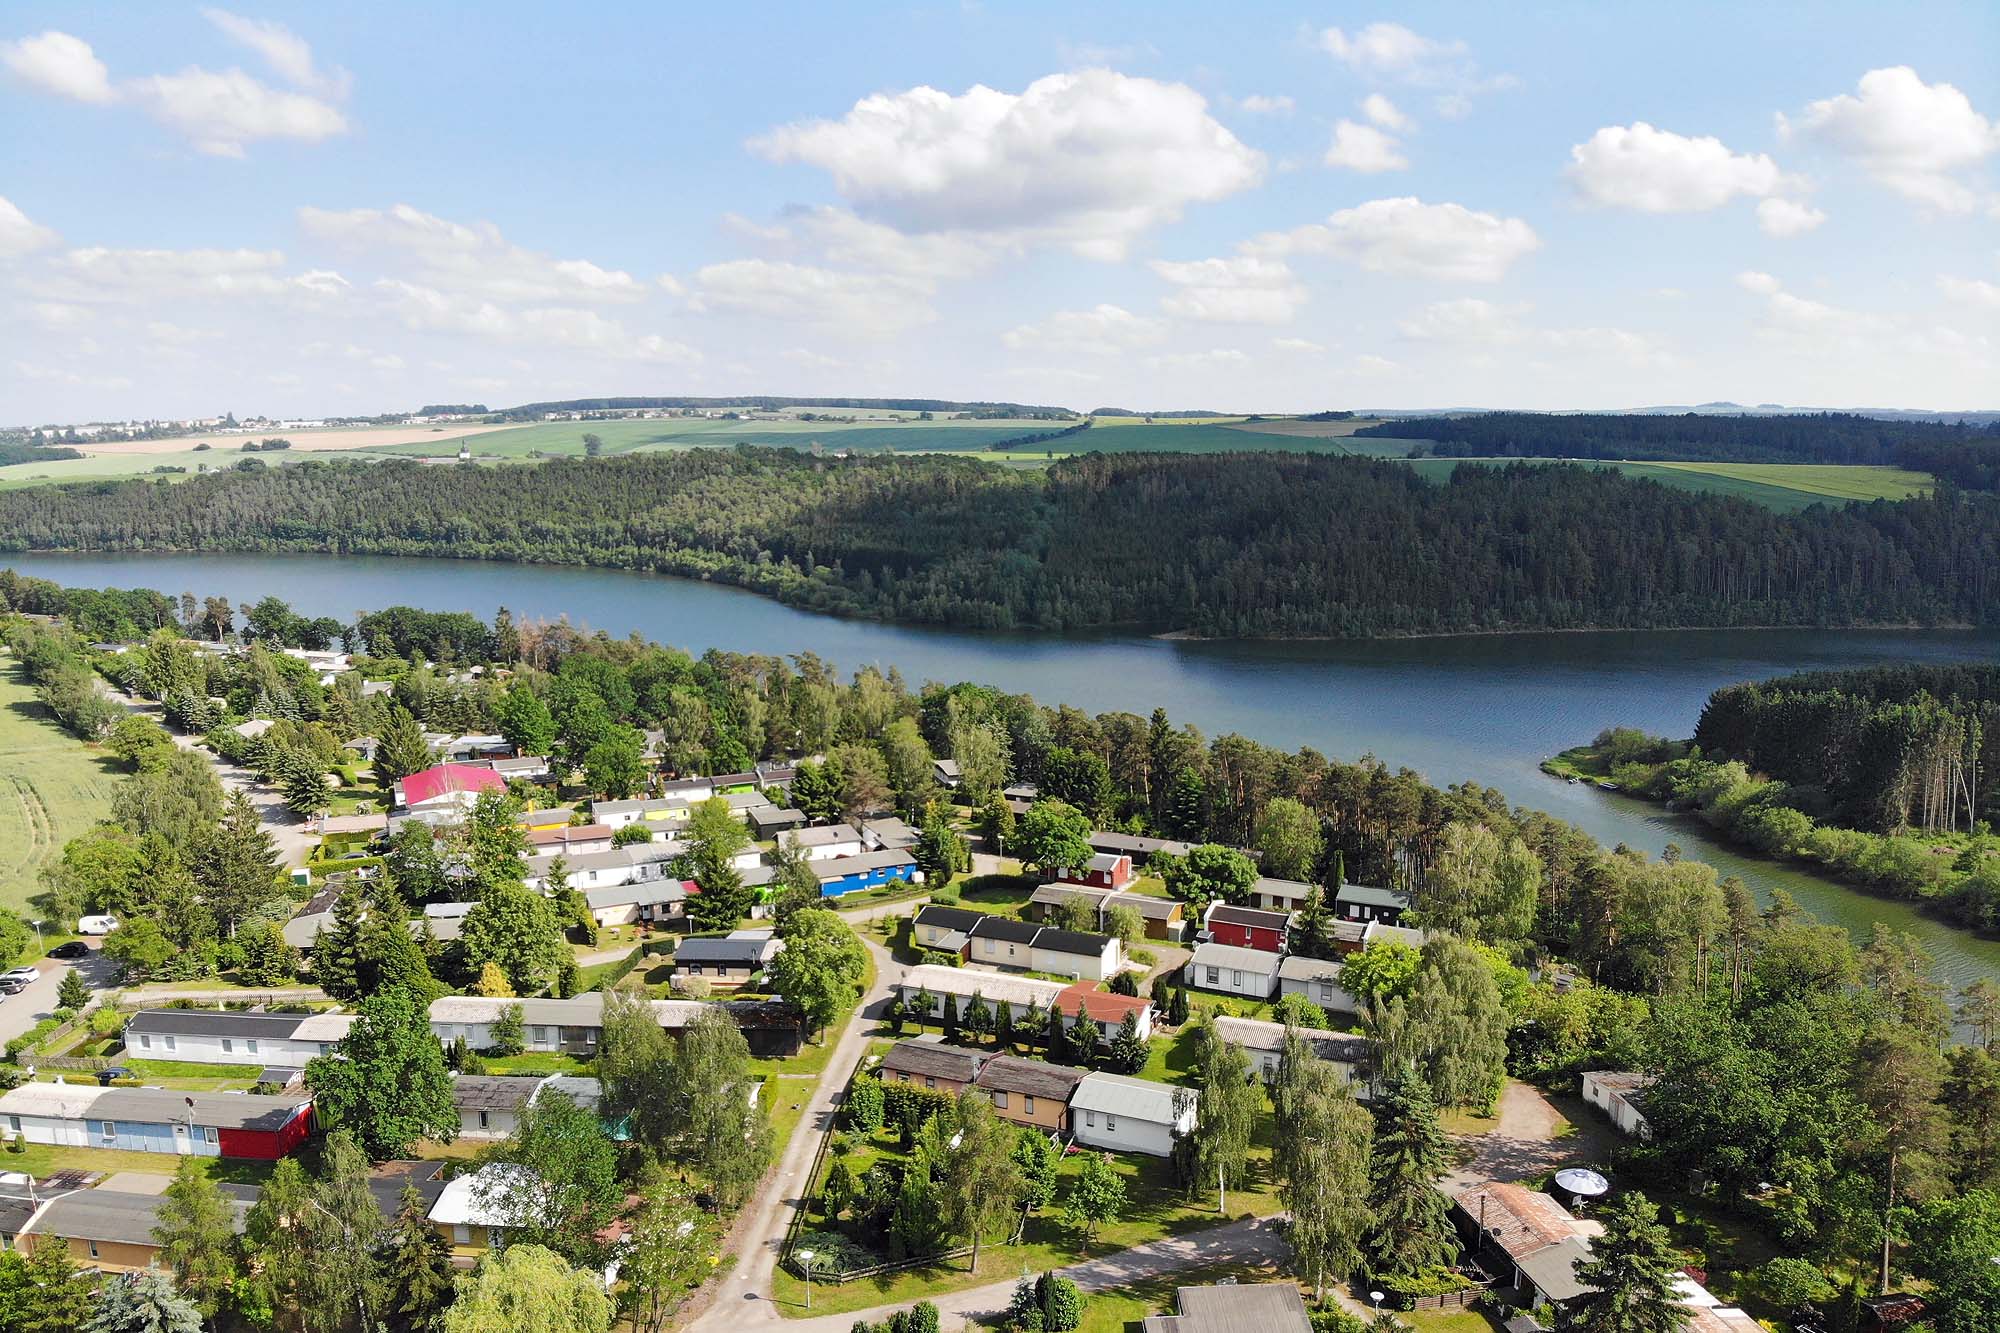 Luftbild vom Bungalowdorf Zadelsdorf